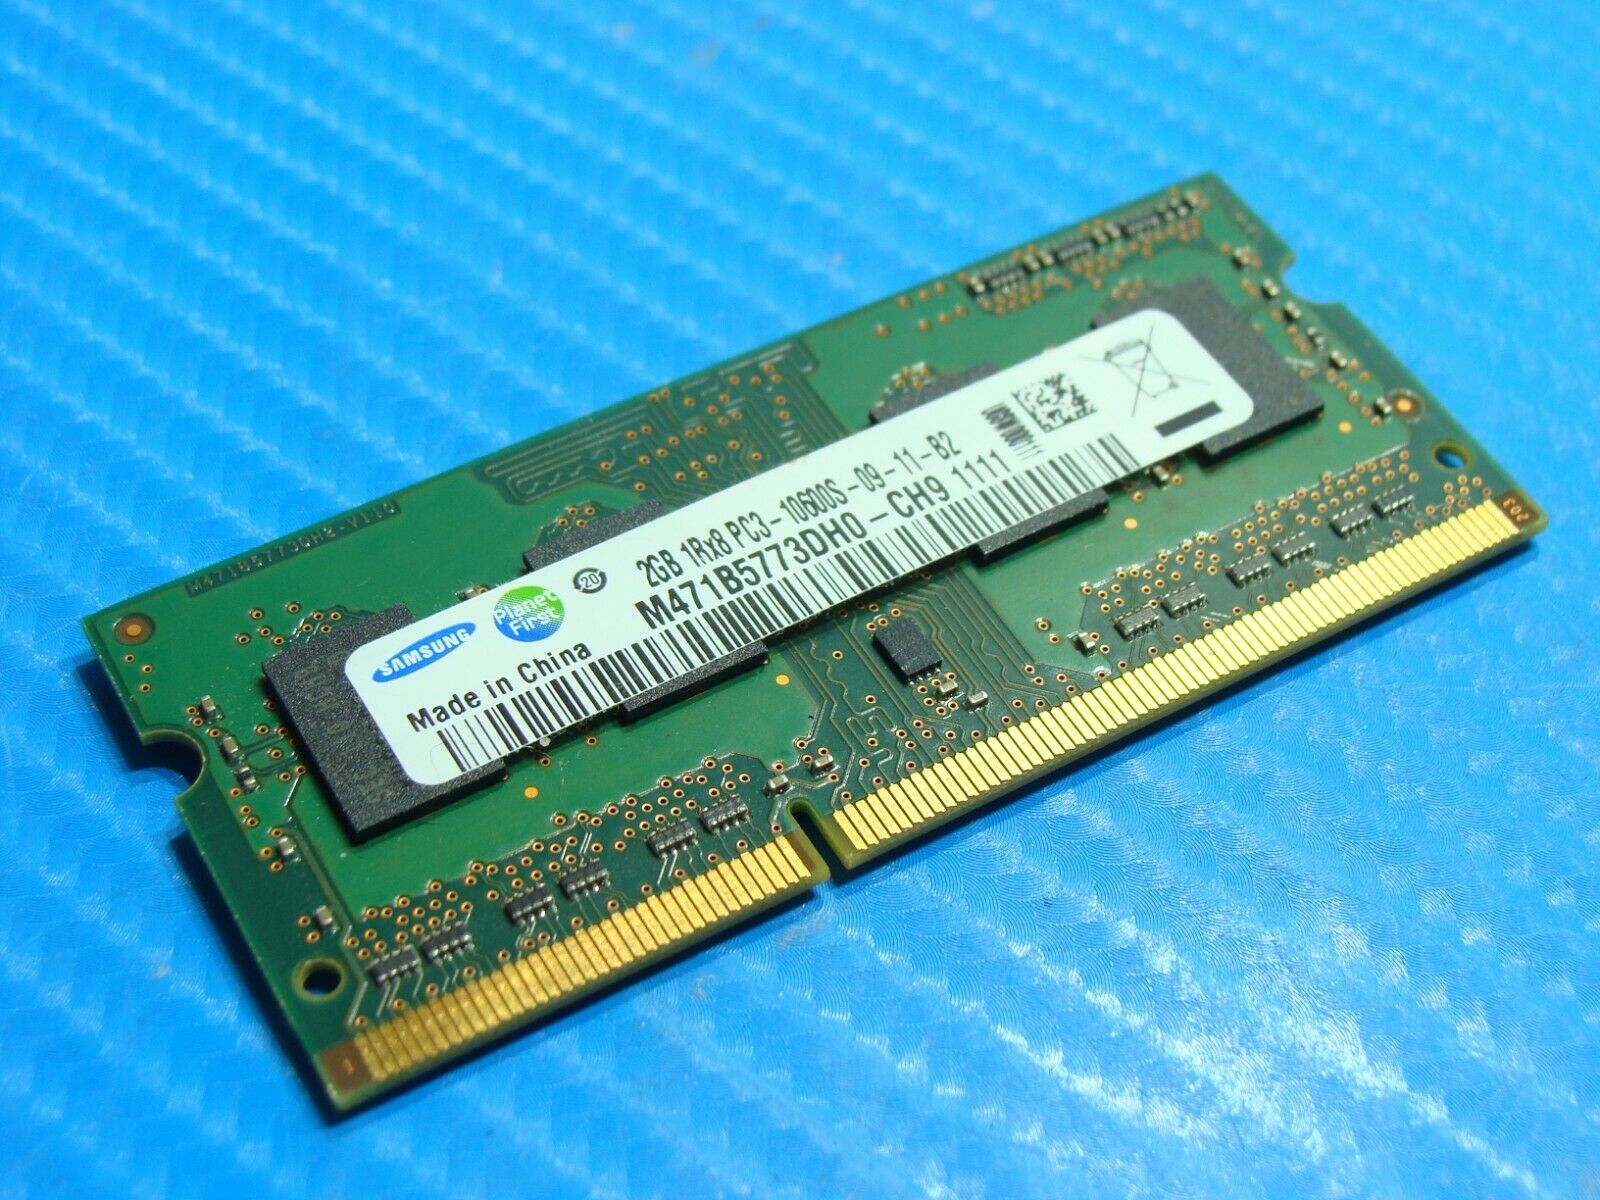 Toshiba S55t-A5334 Samsung 2GB PC3-10600S SO-DIMM RAM Memory M471B5773DH0-CH9 Samsung